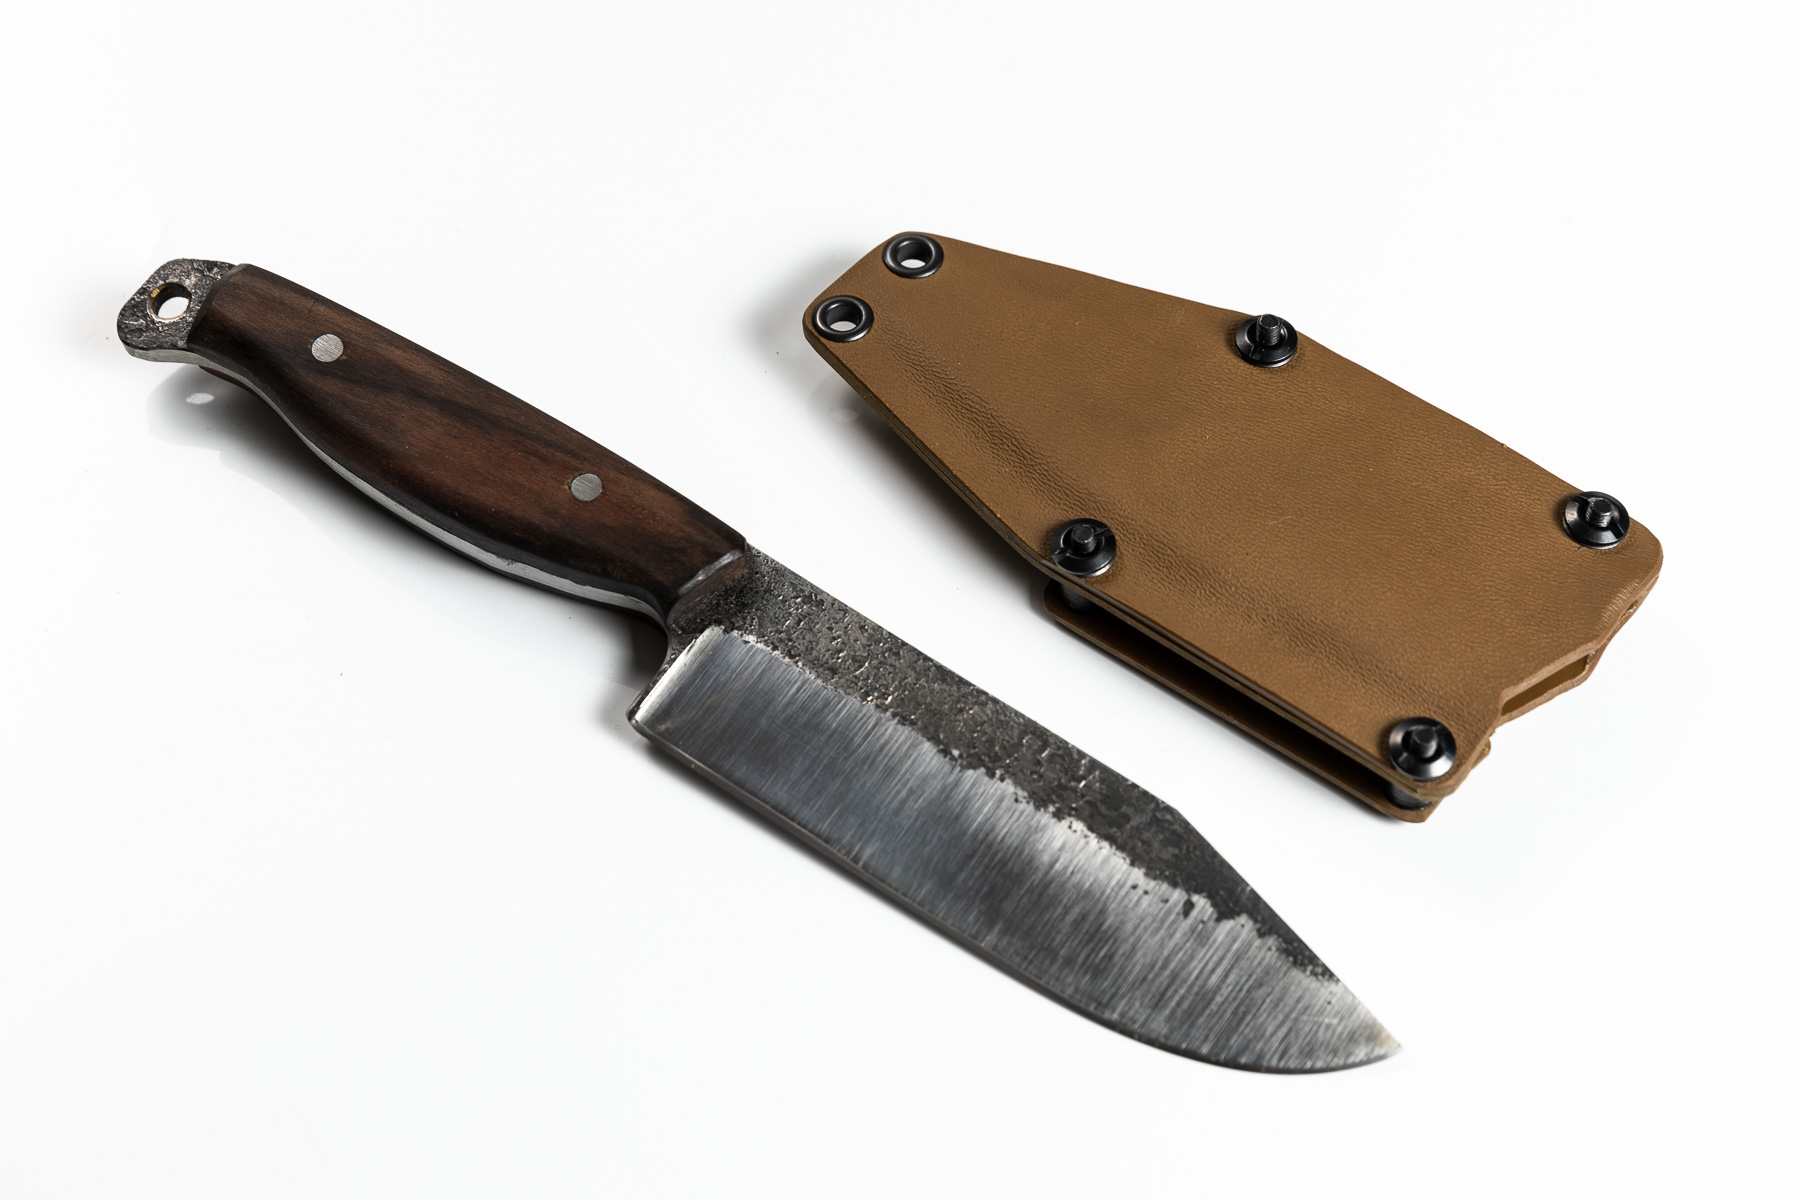 B33 army shop - ročno kovani noži, outdoor nož, vsestranski nož, bushcraft nož, trgovina z vojaško opremo, vojaška trgovina